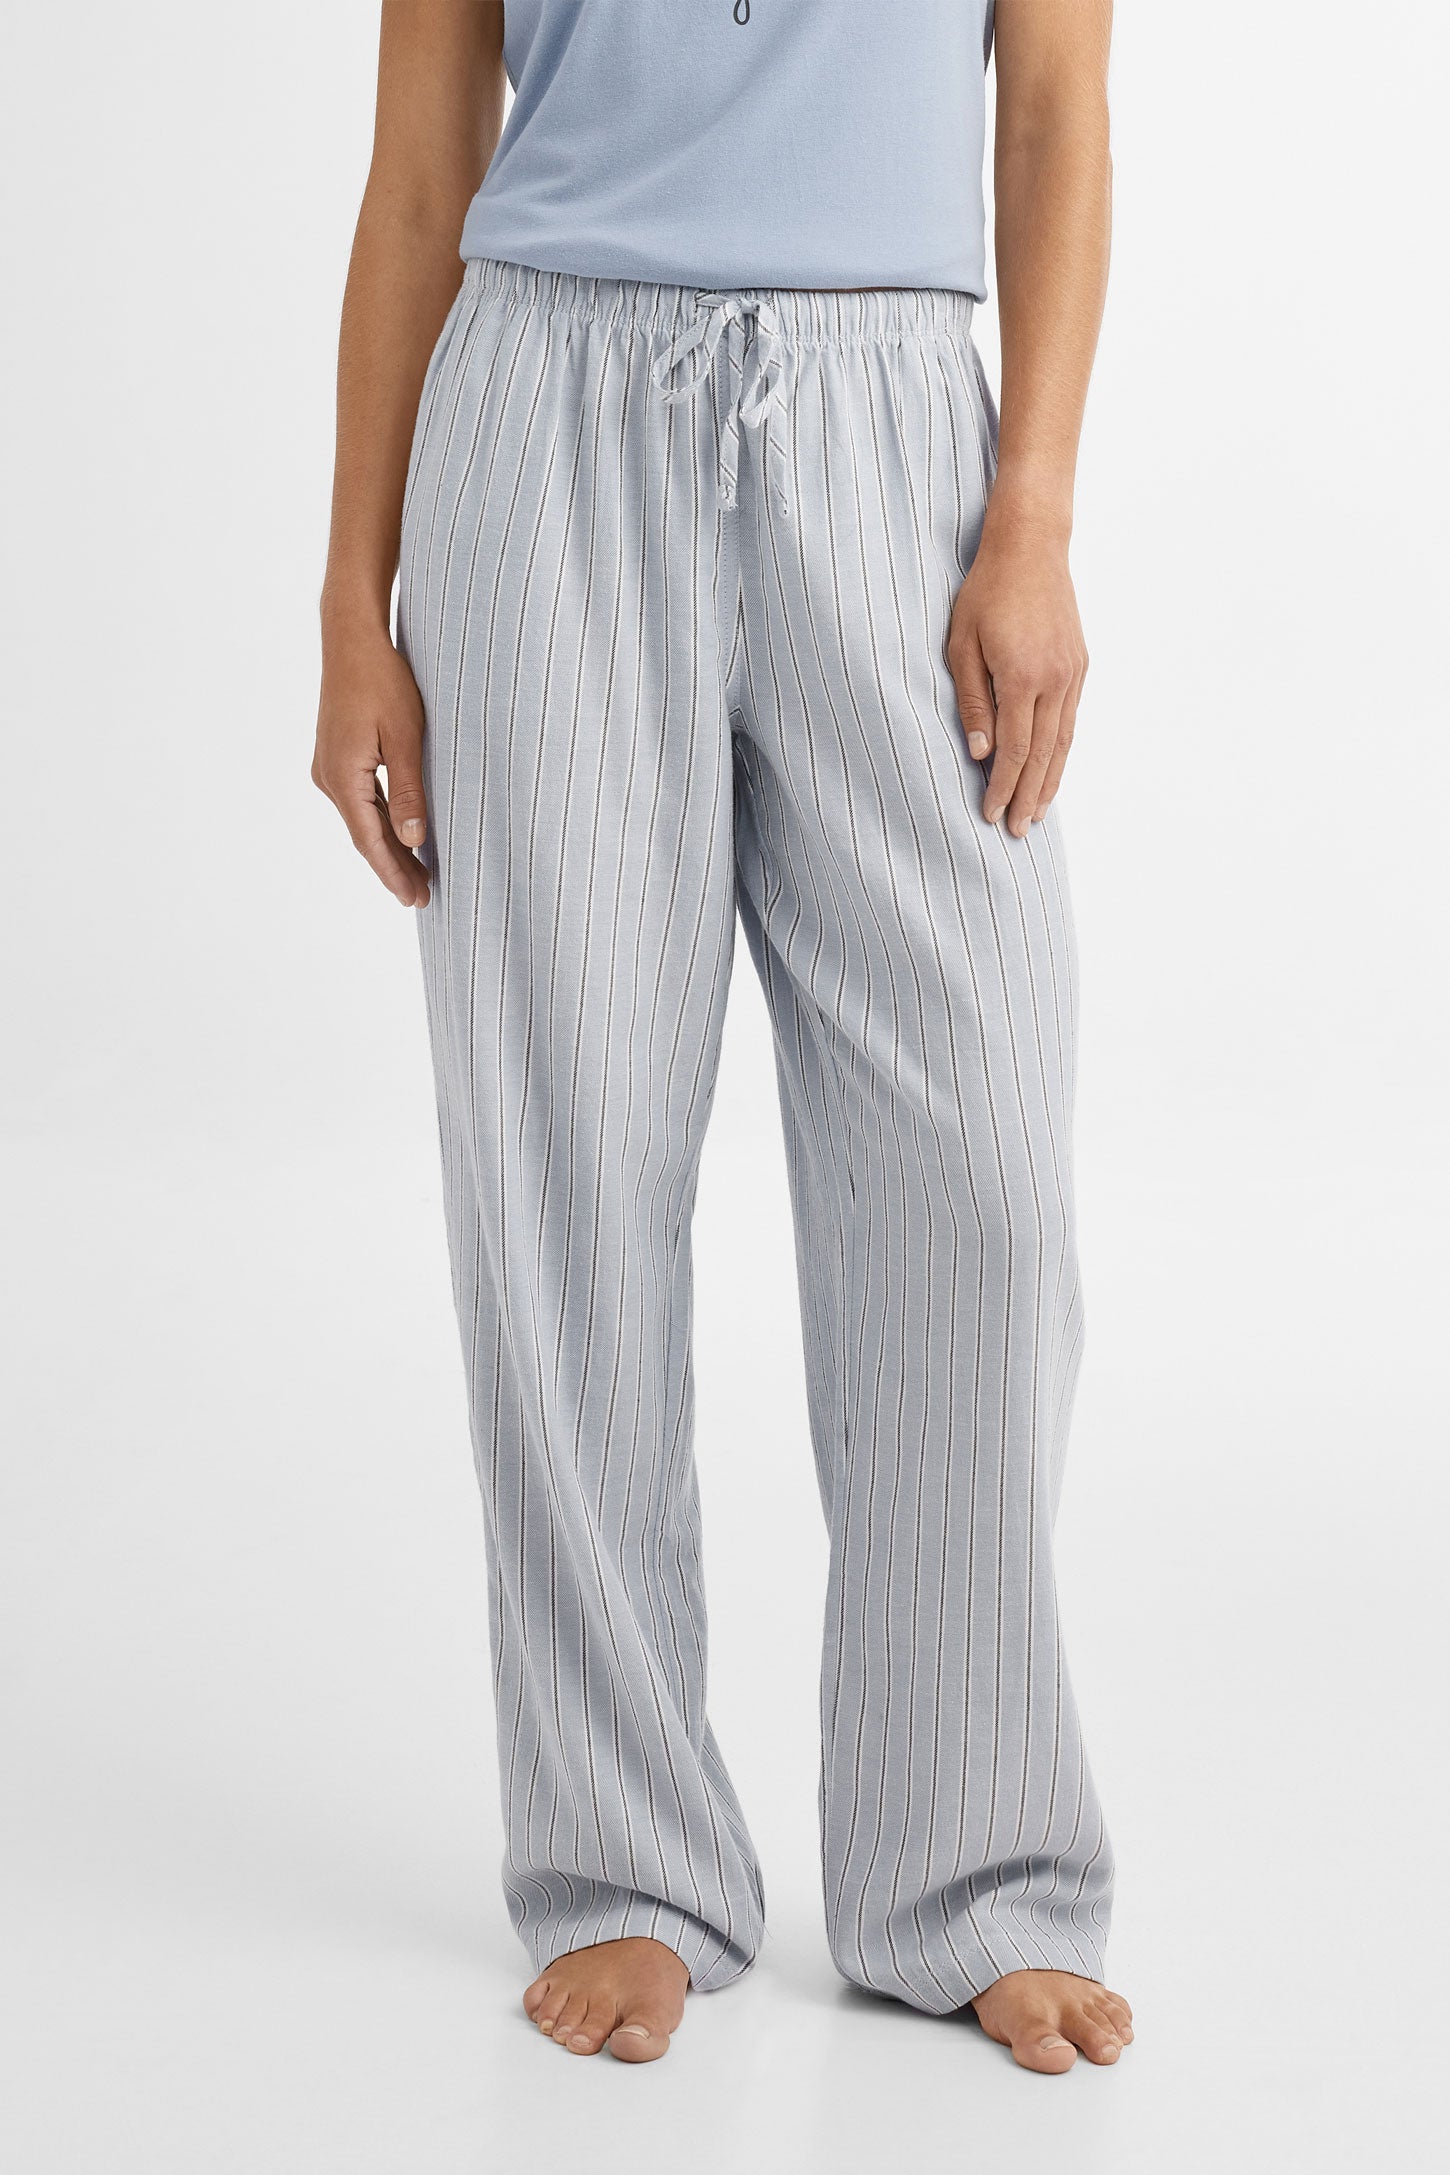 UMIRIKO Women's Whale Fish Pajama Pants Lounge Pants XS H020432